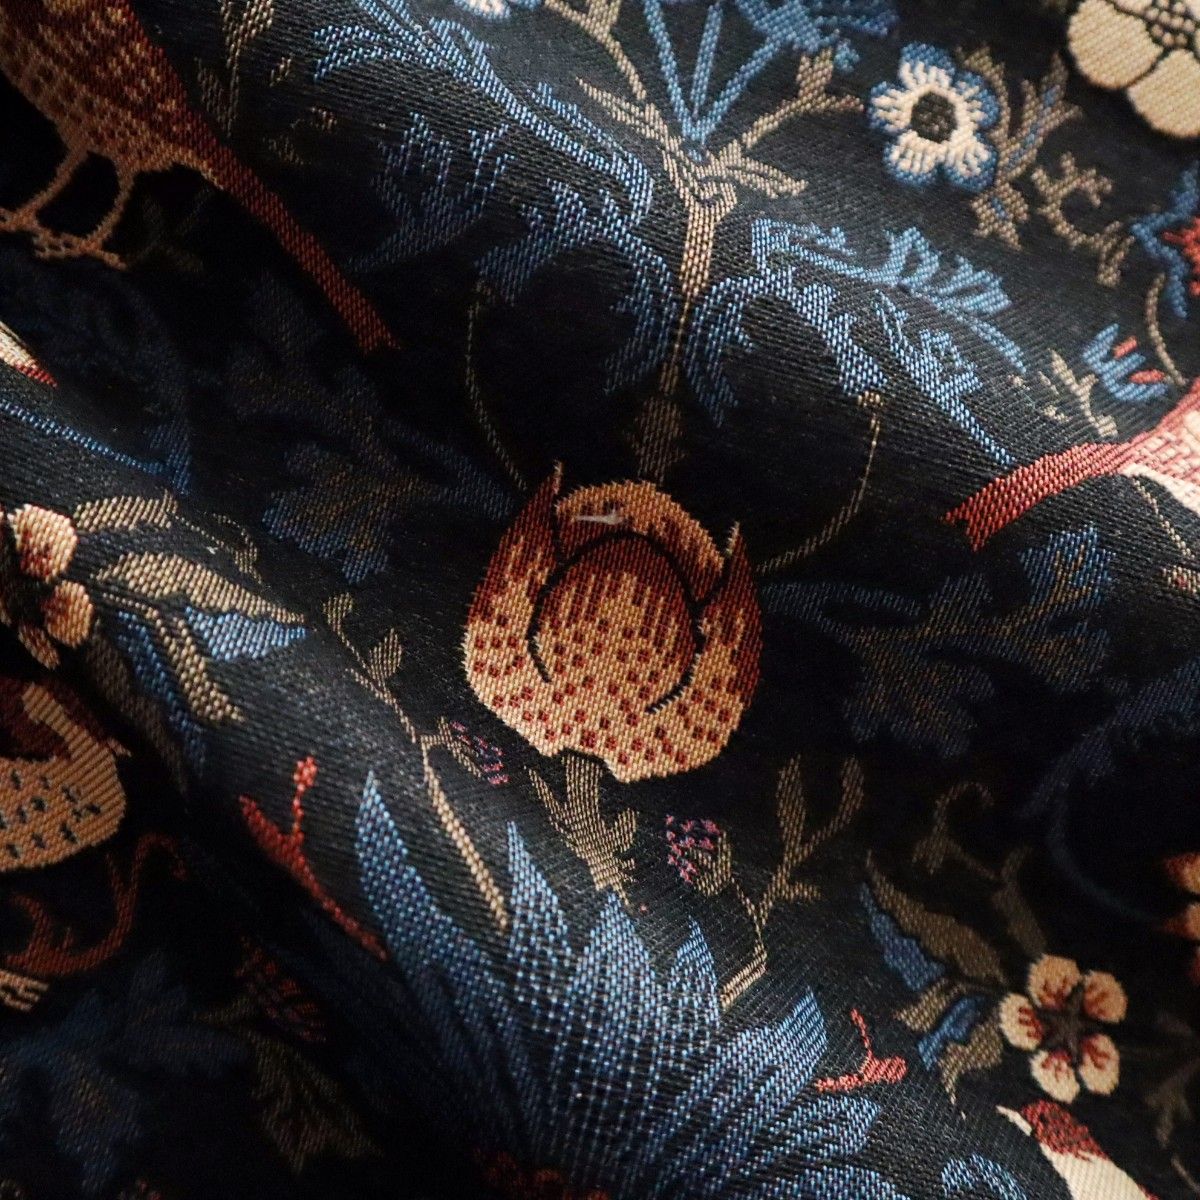 J60A 花鳥柄 ゴブラン織り生地 ジャガード織り ブラック 145×50cm